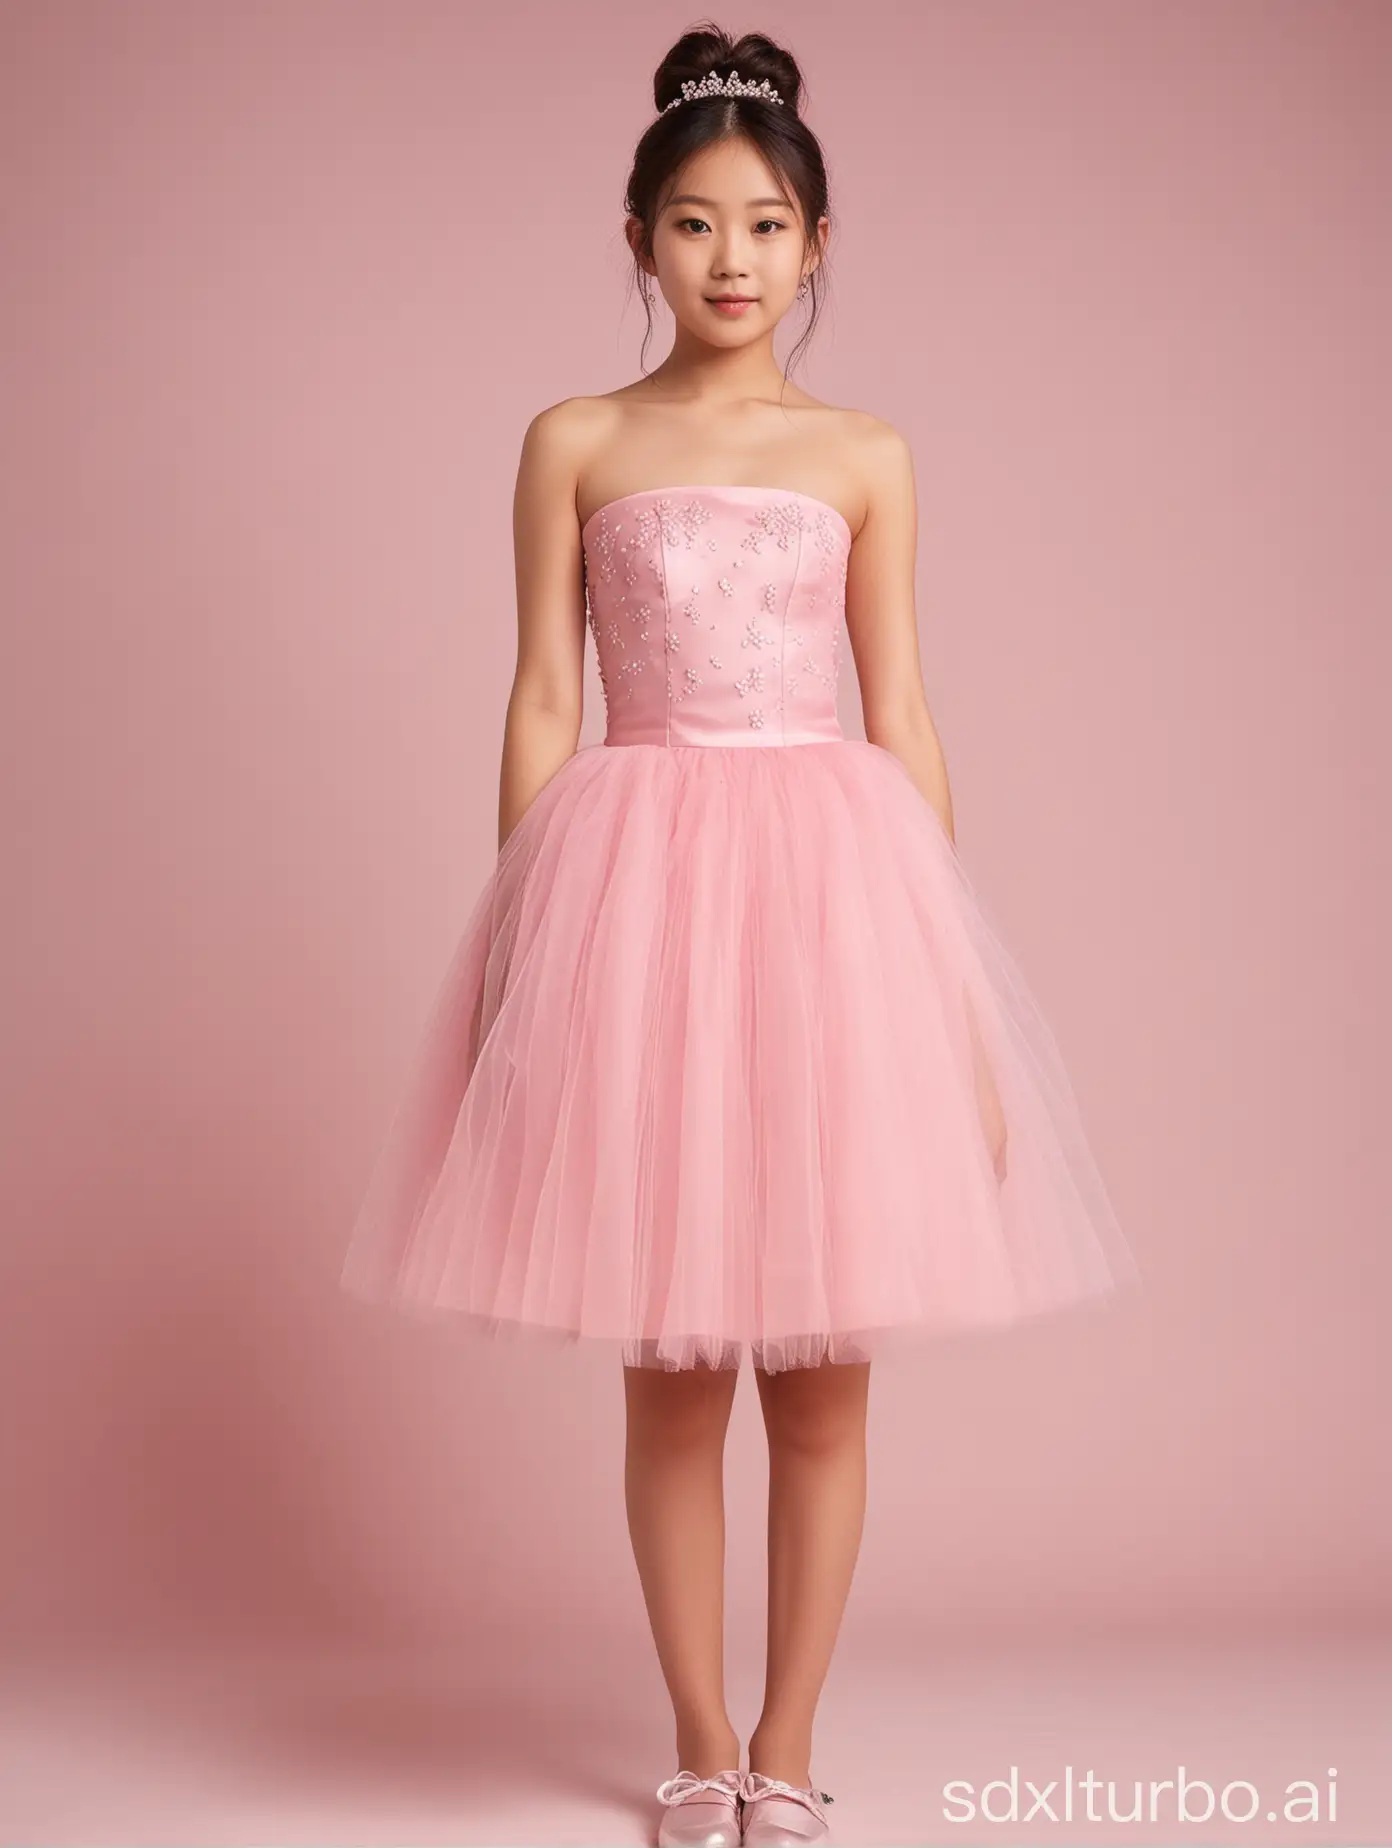 Japanese-Girl-in-Pink-Strapless-Tulle-Dress